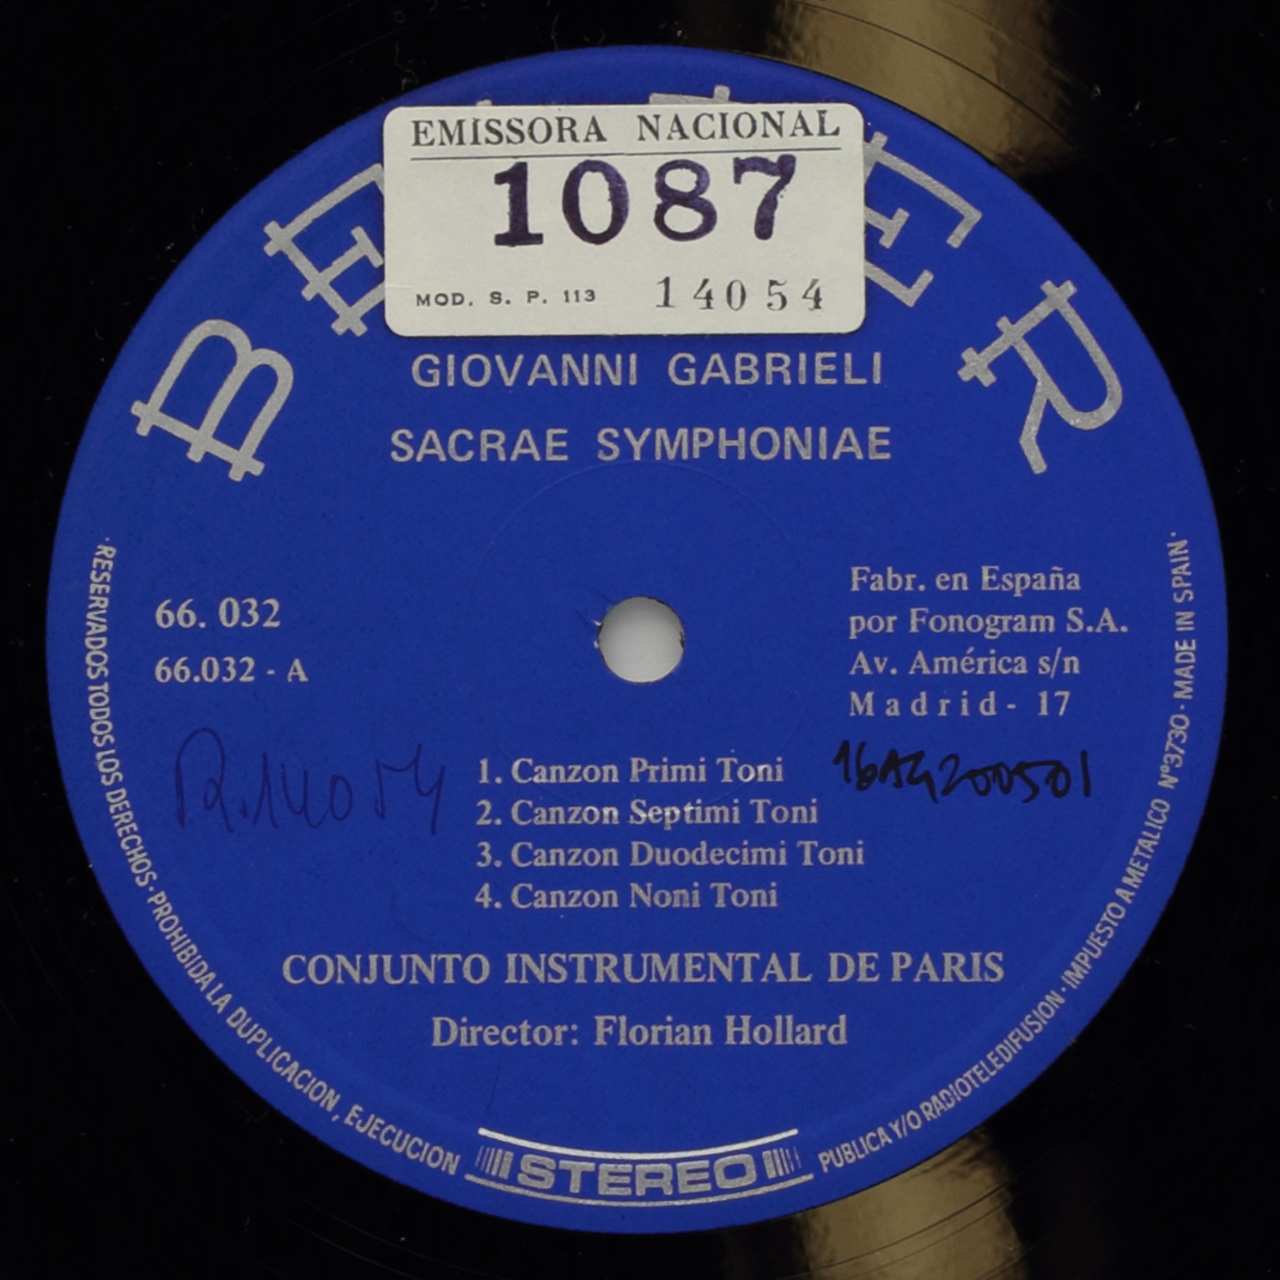 Andrea e Giovanni Gabrieli: Sacrae Symphoniae